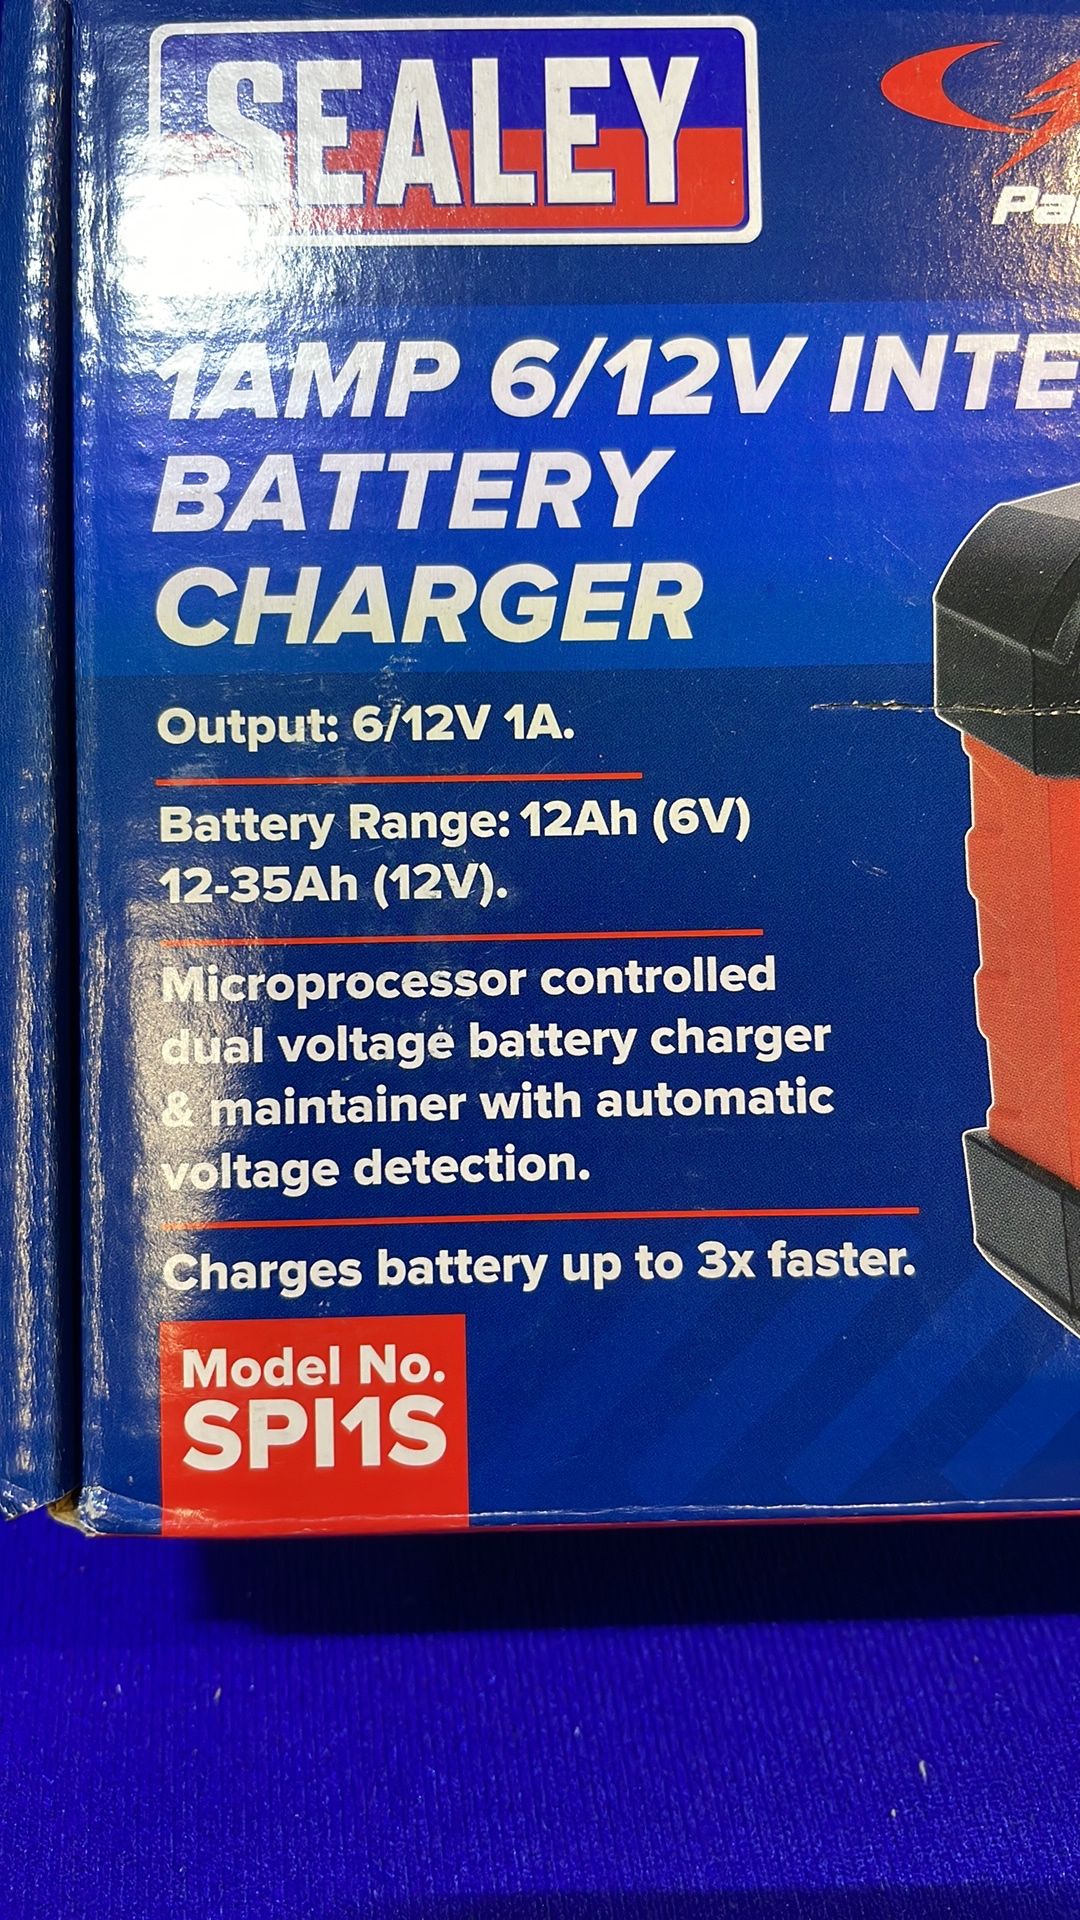 3 x Sealey Schumacher Intelligent Battery Charger 1A 6/2V SPi1S - Image 2 of 4